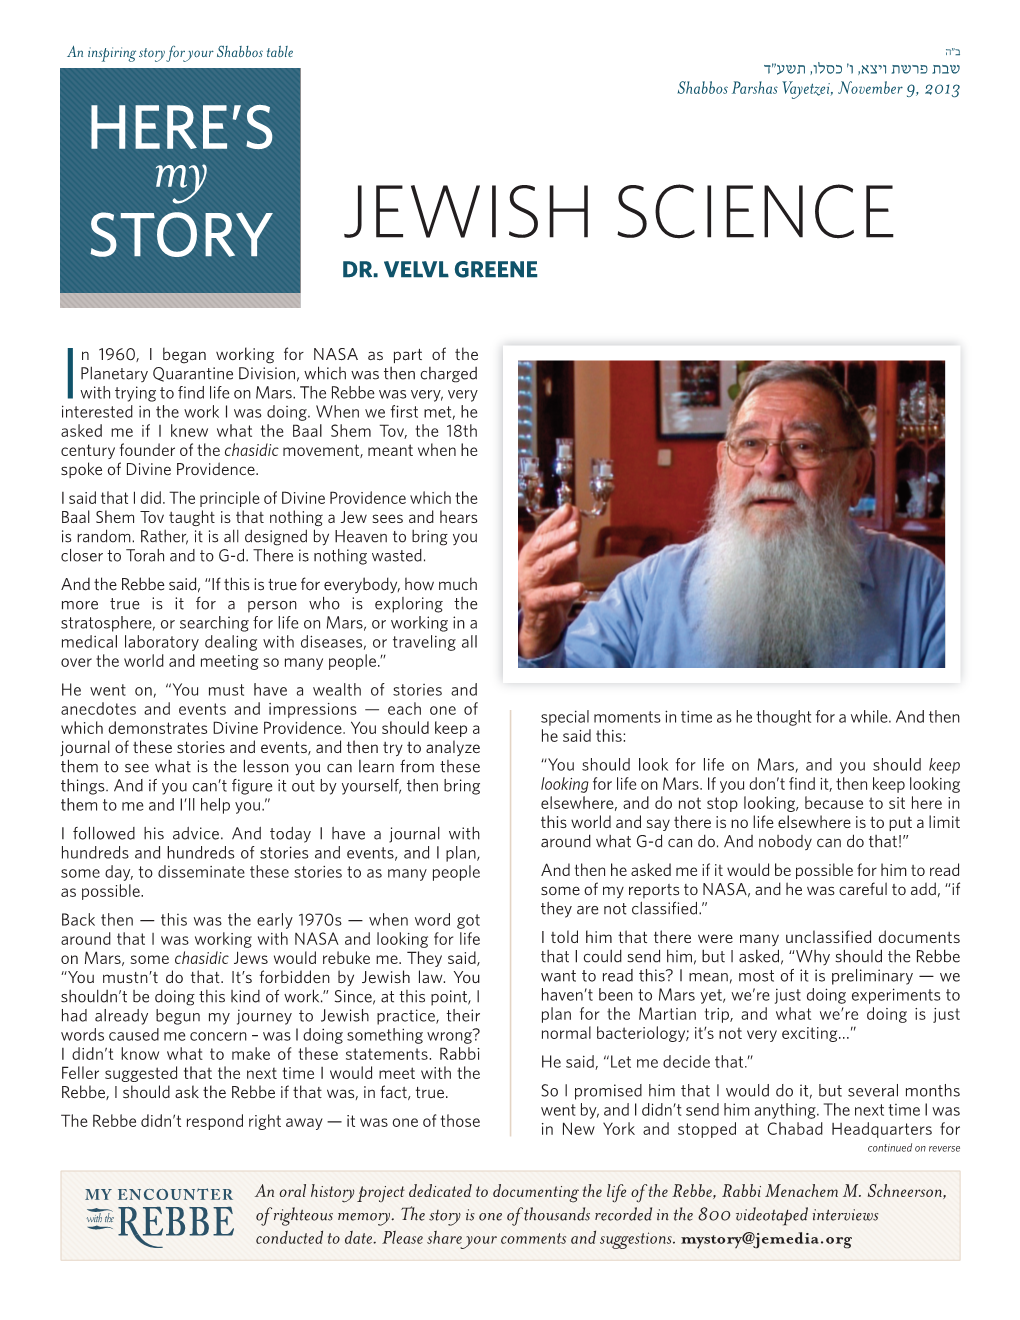 Jewish Science Dr